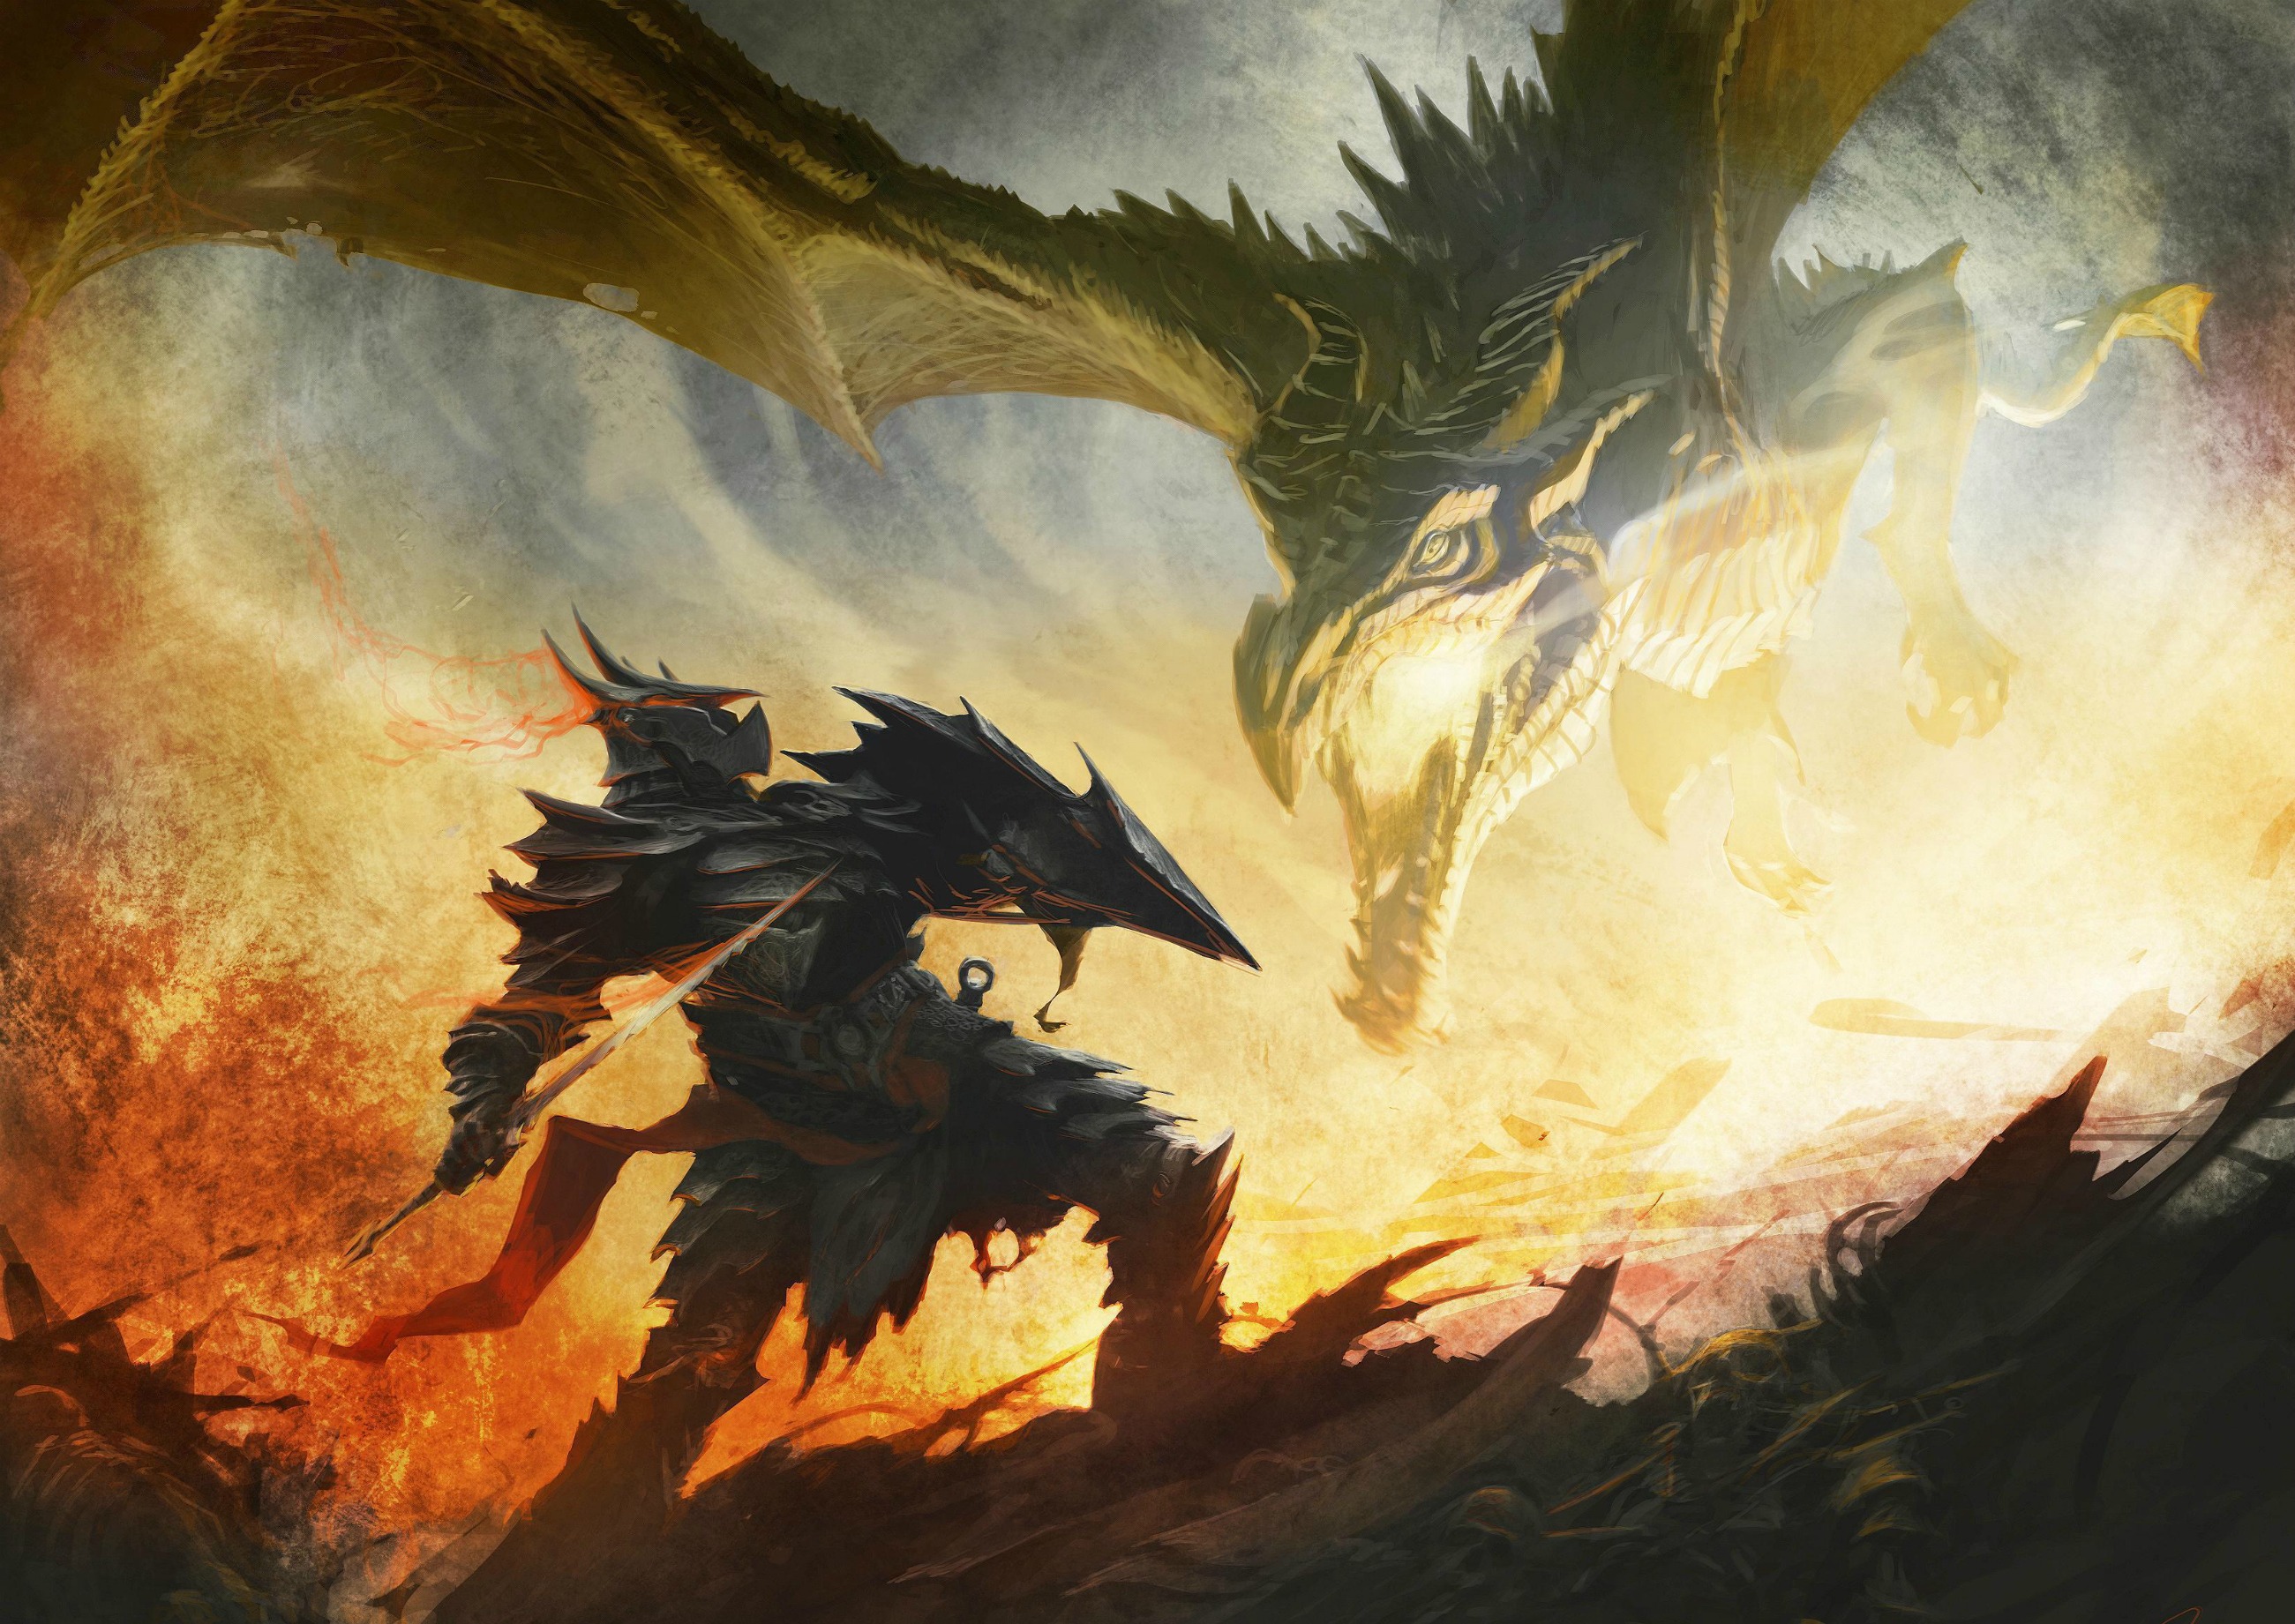 skyrim, video game, the elder scrolls v: skyrim, dragon, the elder scrolls